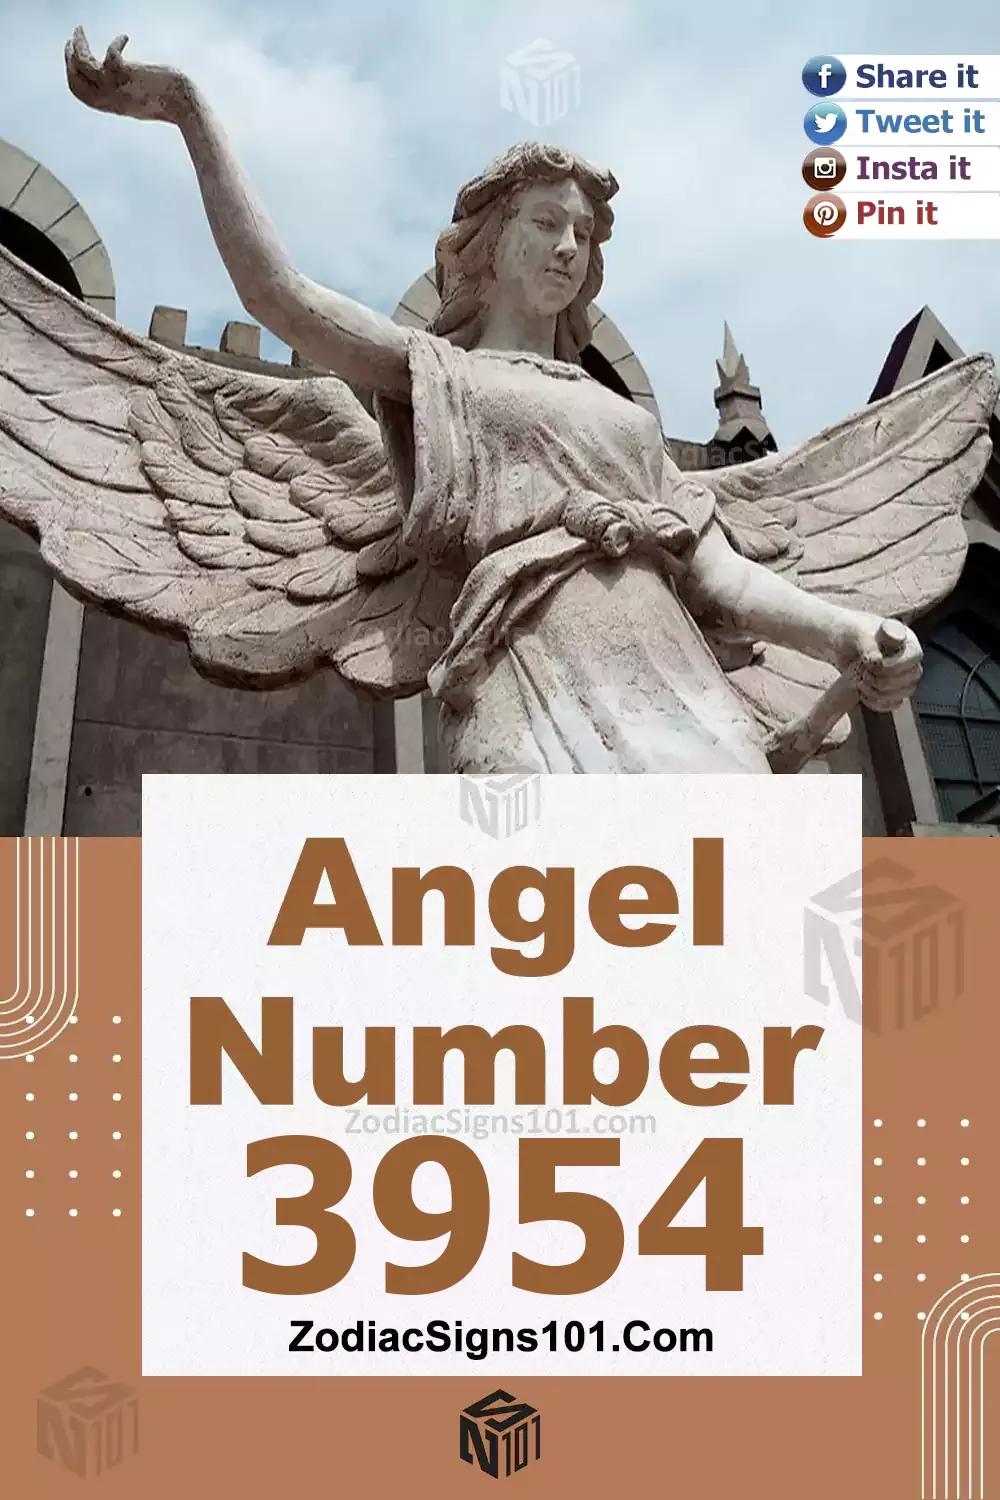 3954-Angel-Number-Meaning.jpg